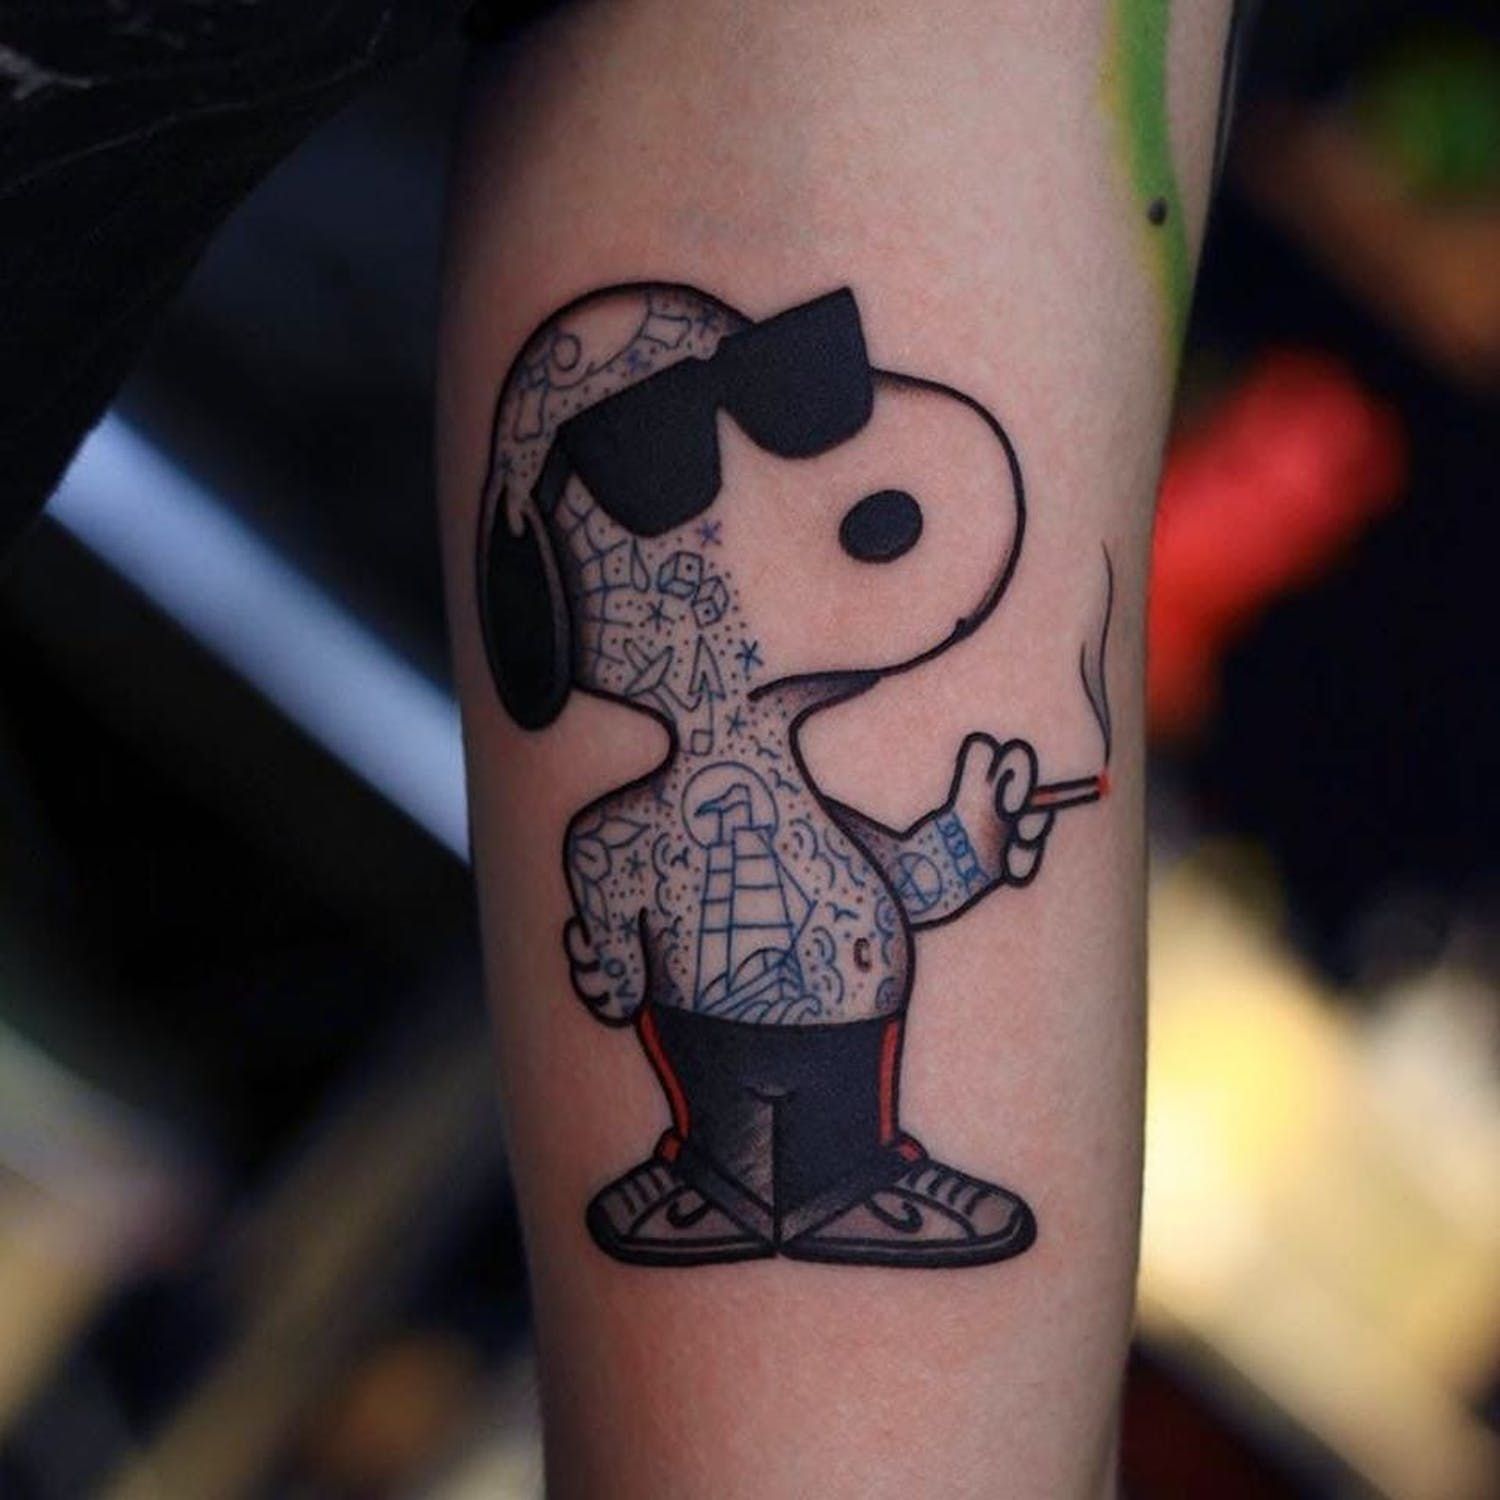 Minimalist Snoopy and Woodstock tattoo on the wrist